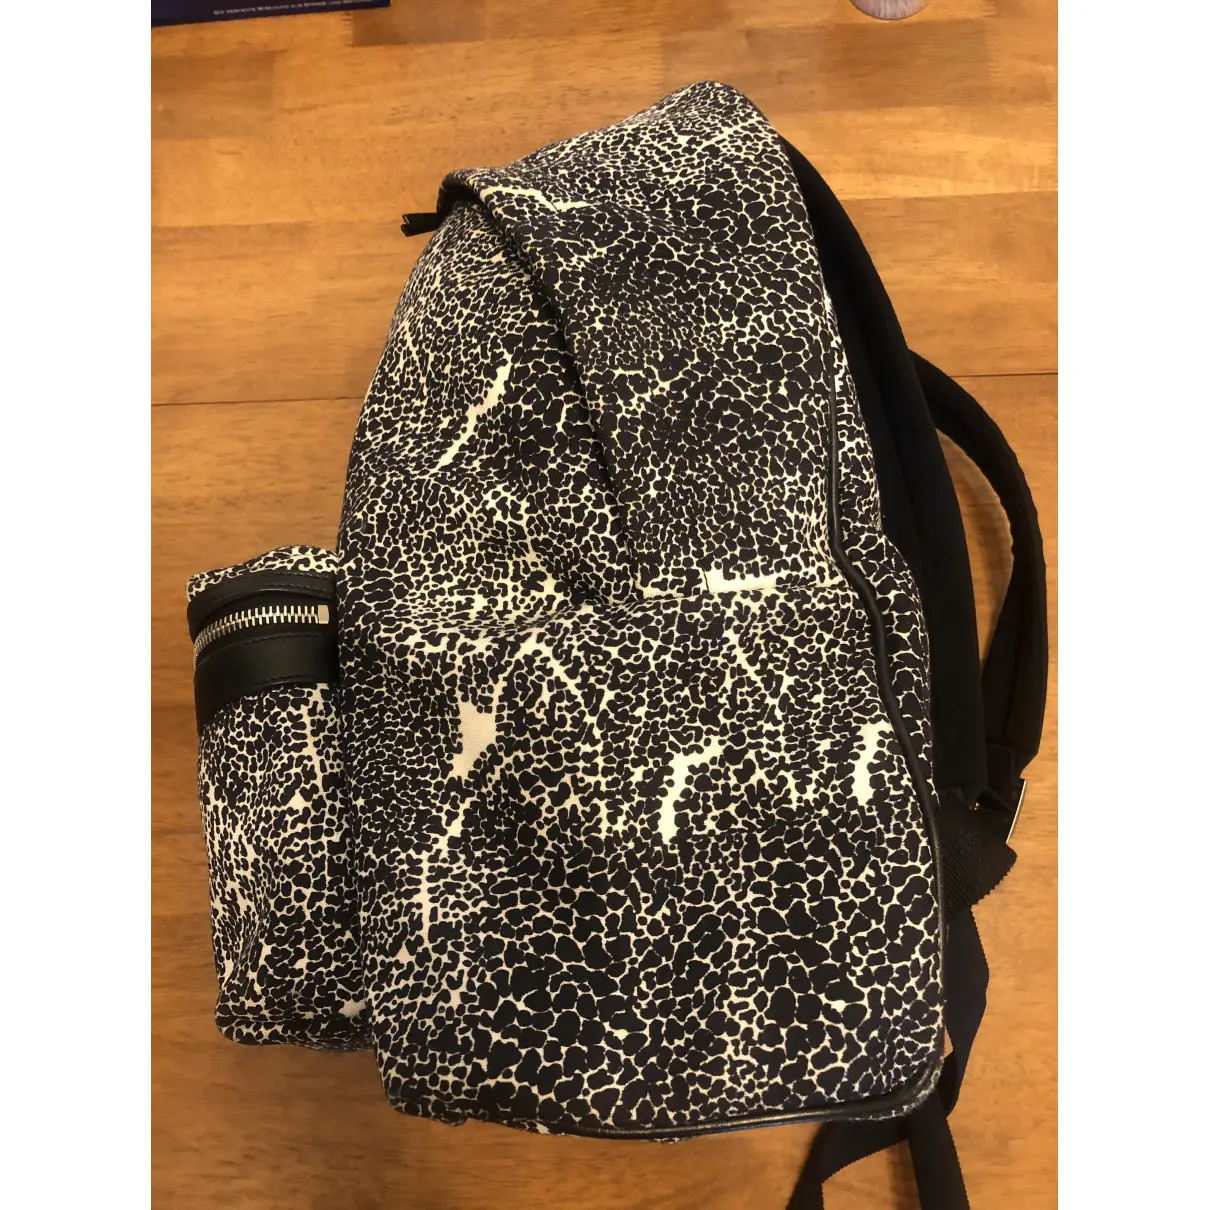 City Backpack cloth bag Saint Laurent